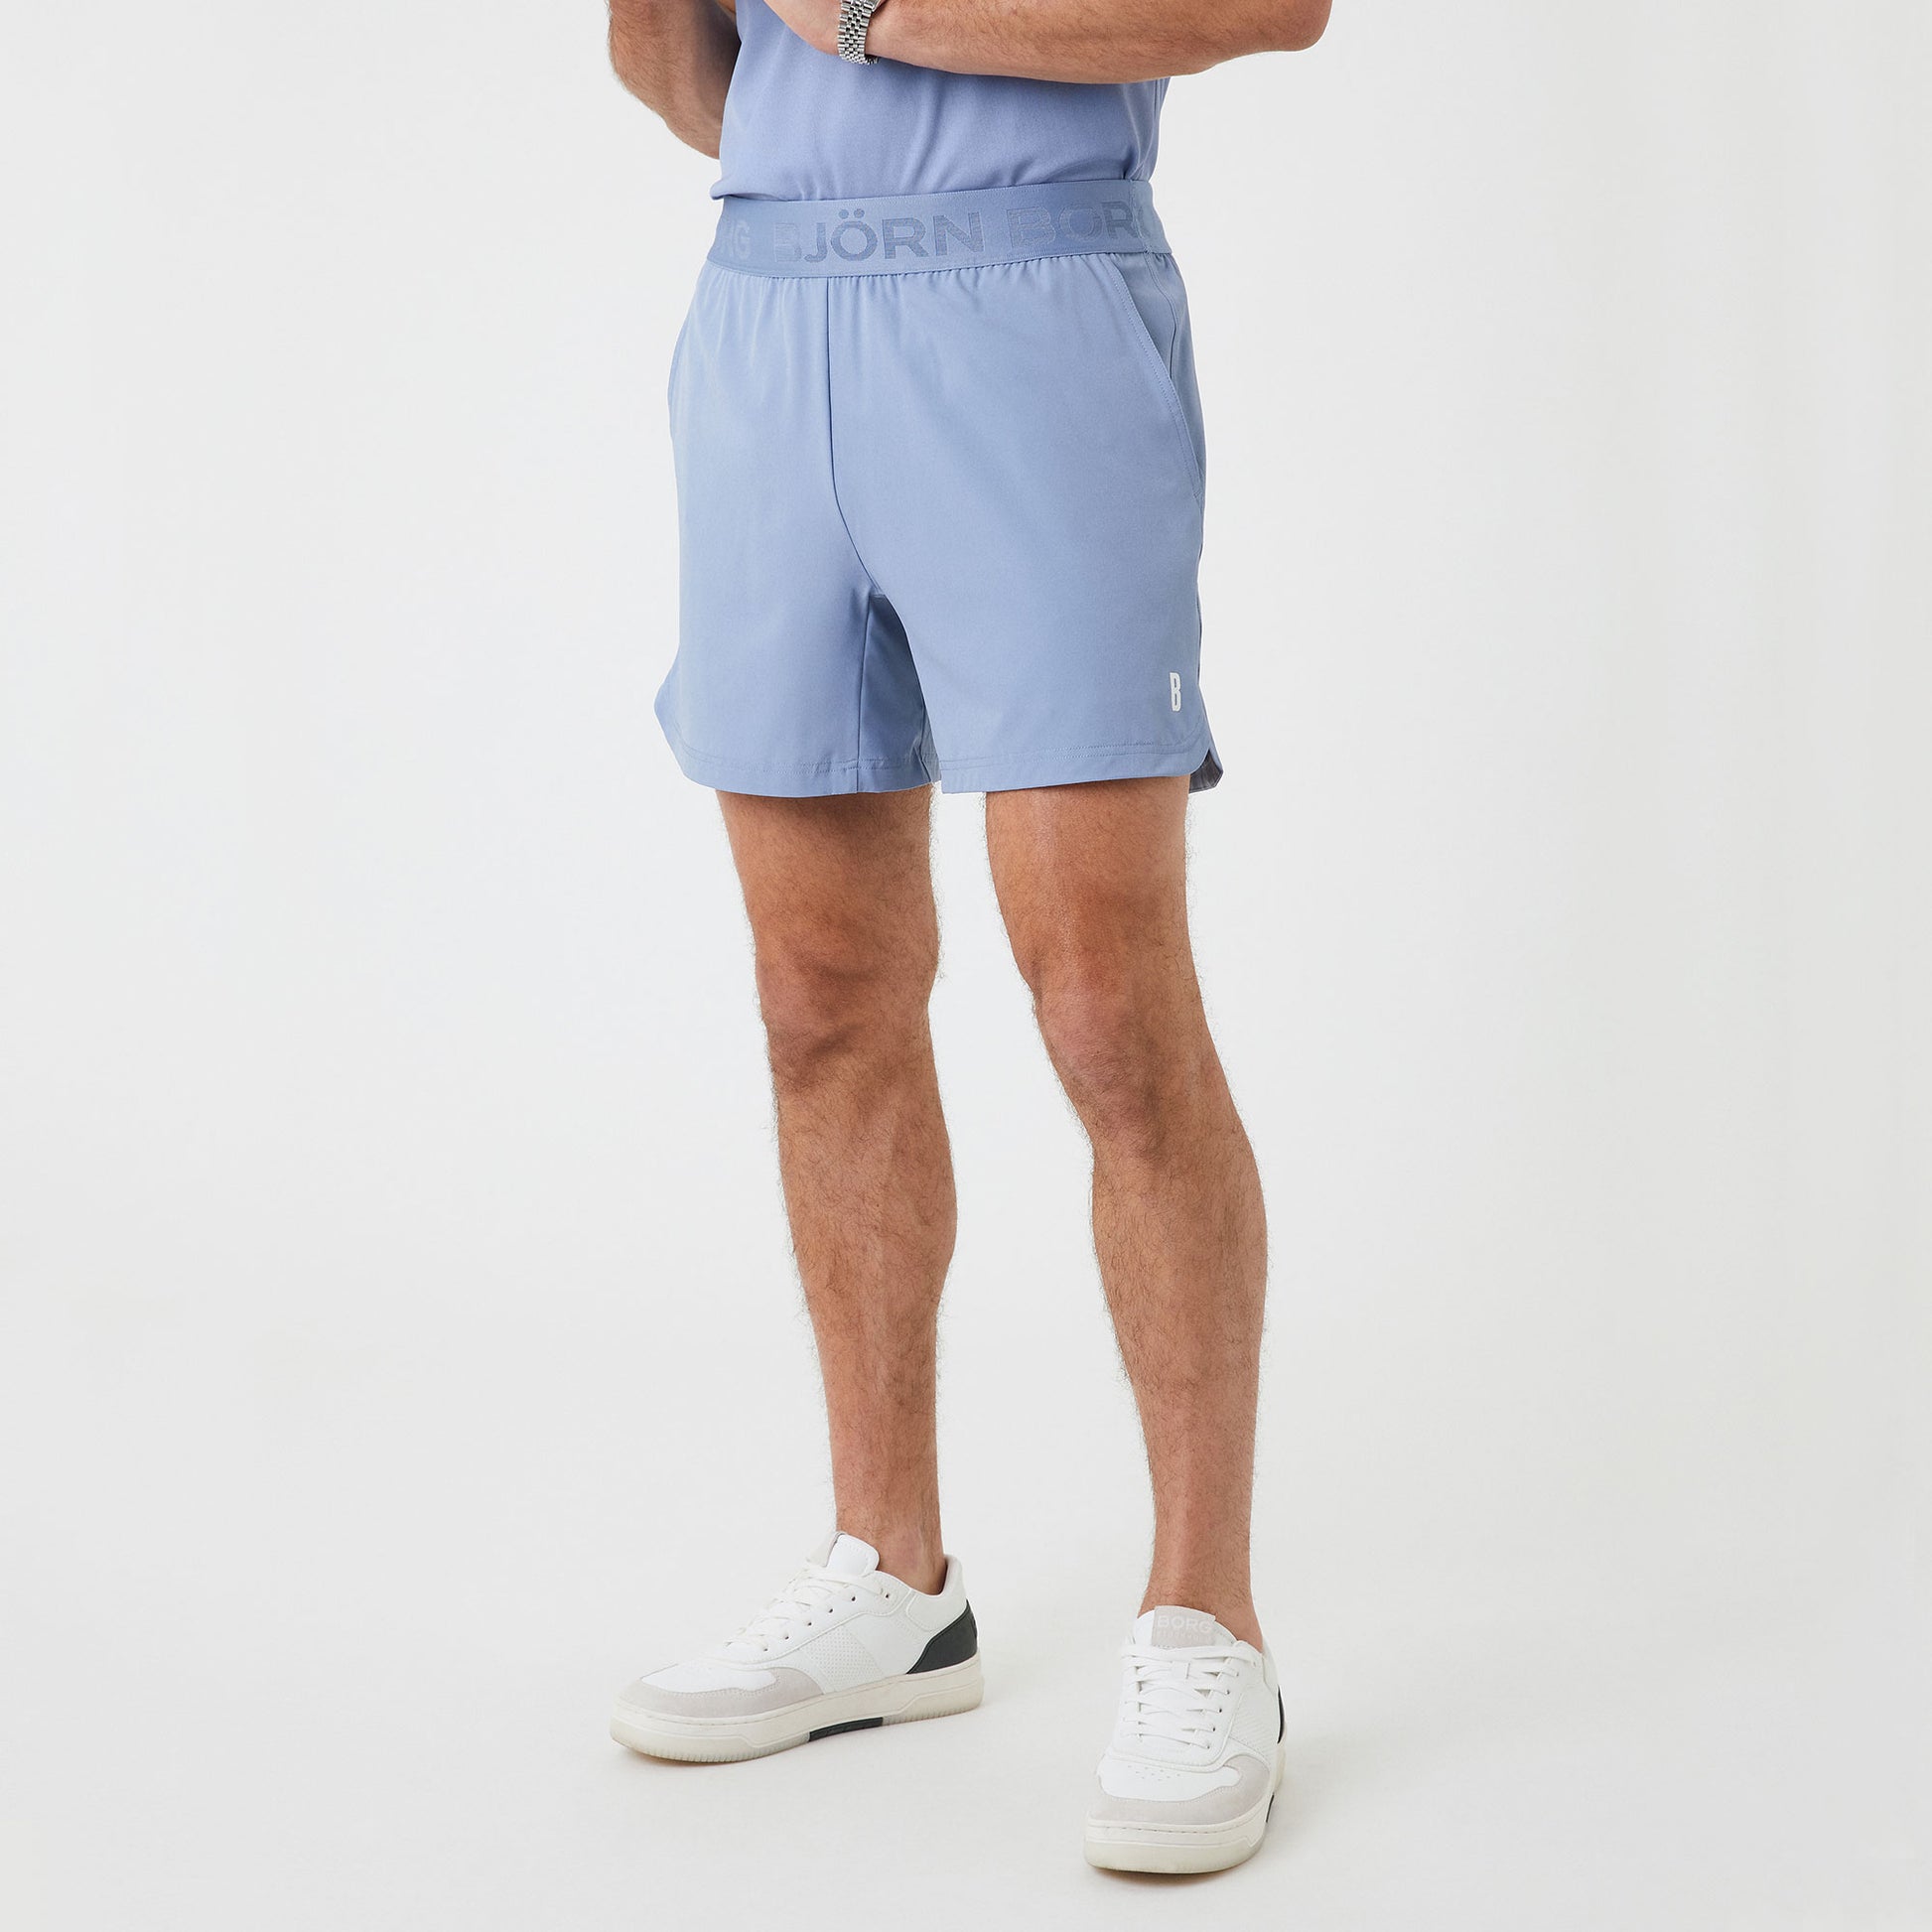 Björn Borg Ace Men's 7-Inch Tennis Shorts Blue (1)